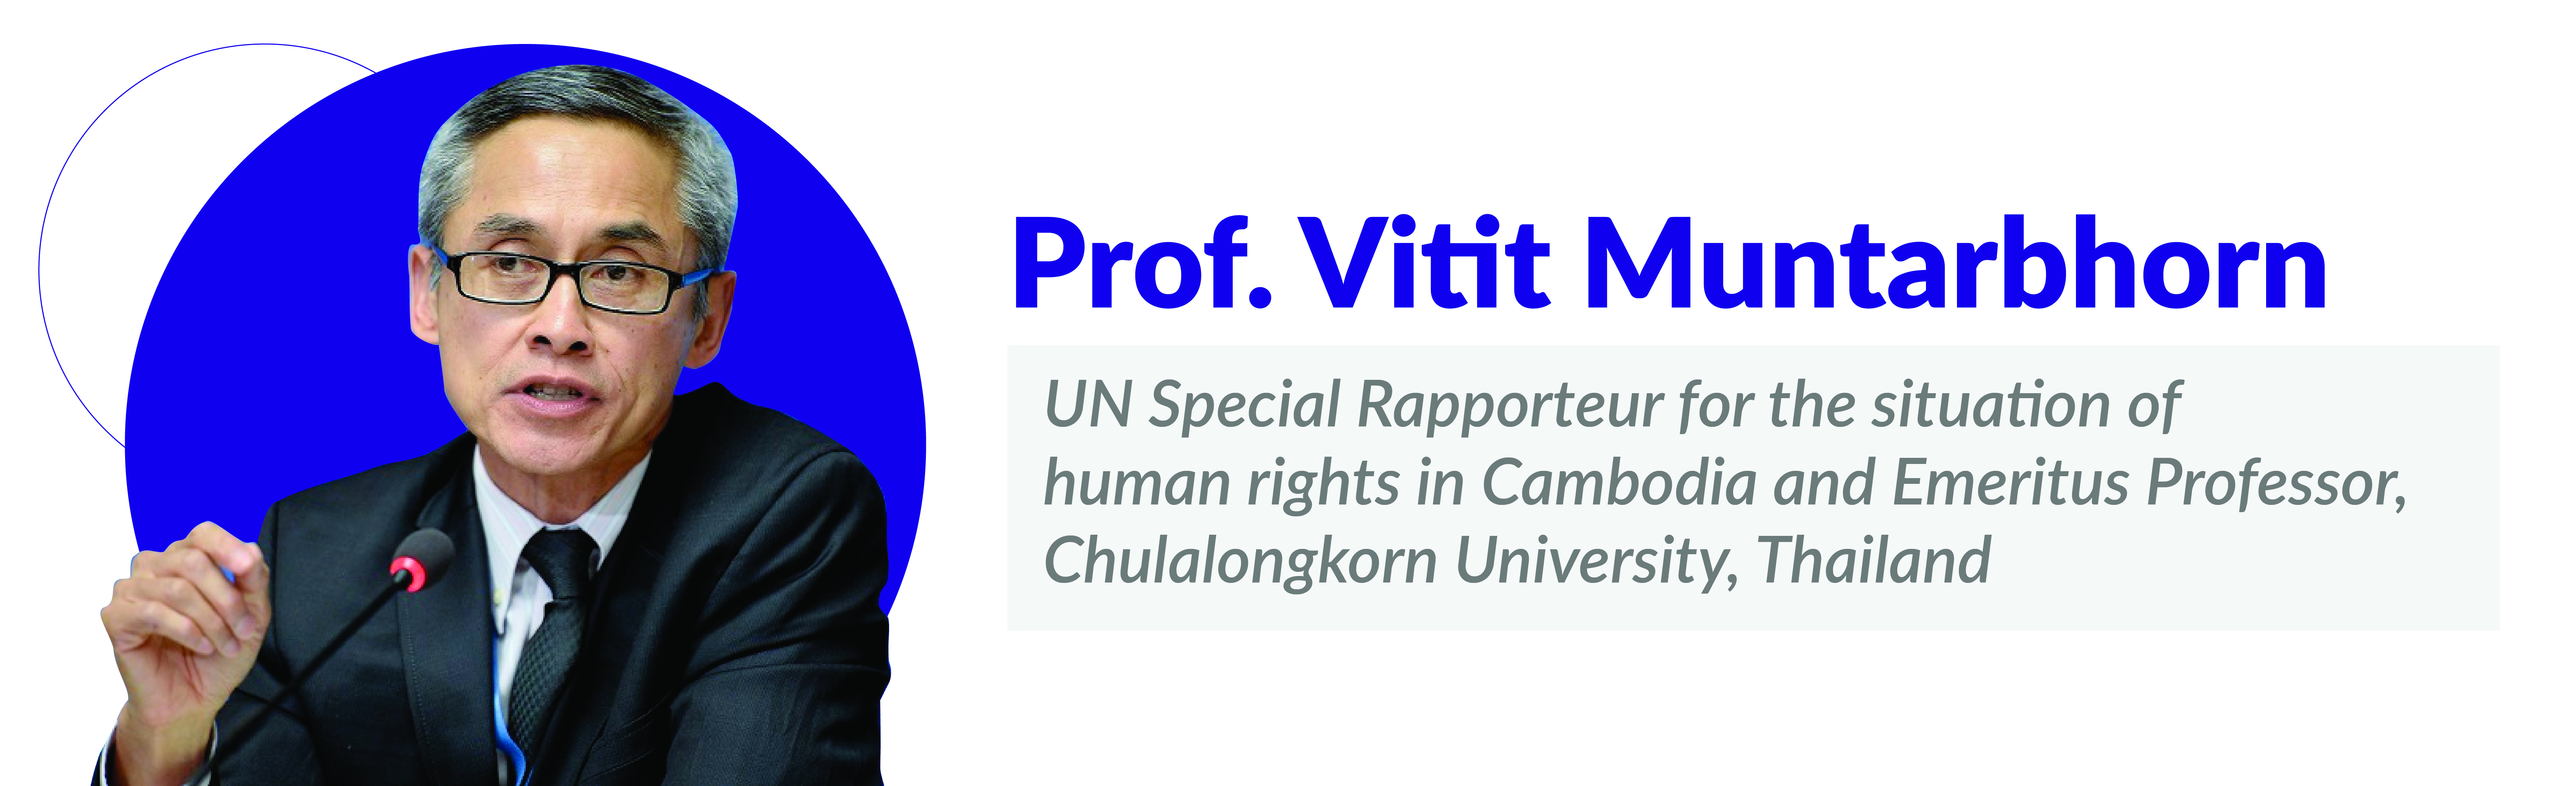 Professor Vitit Muntarbhorn